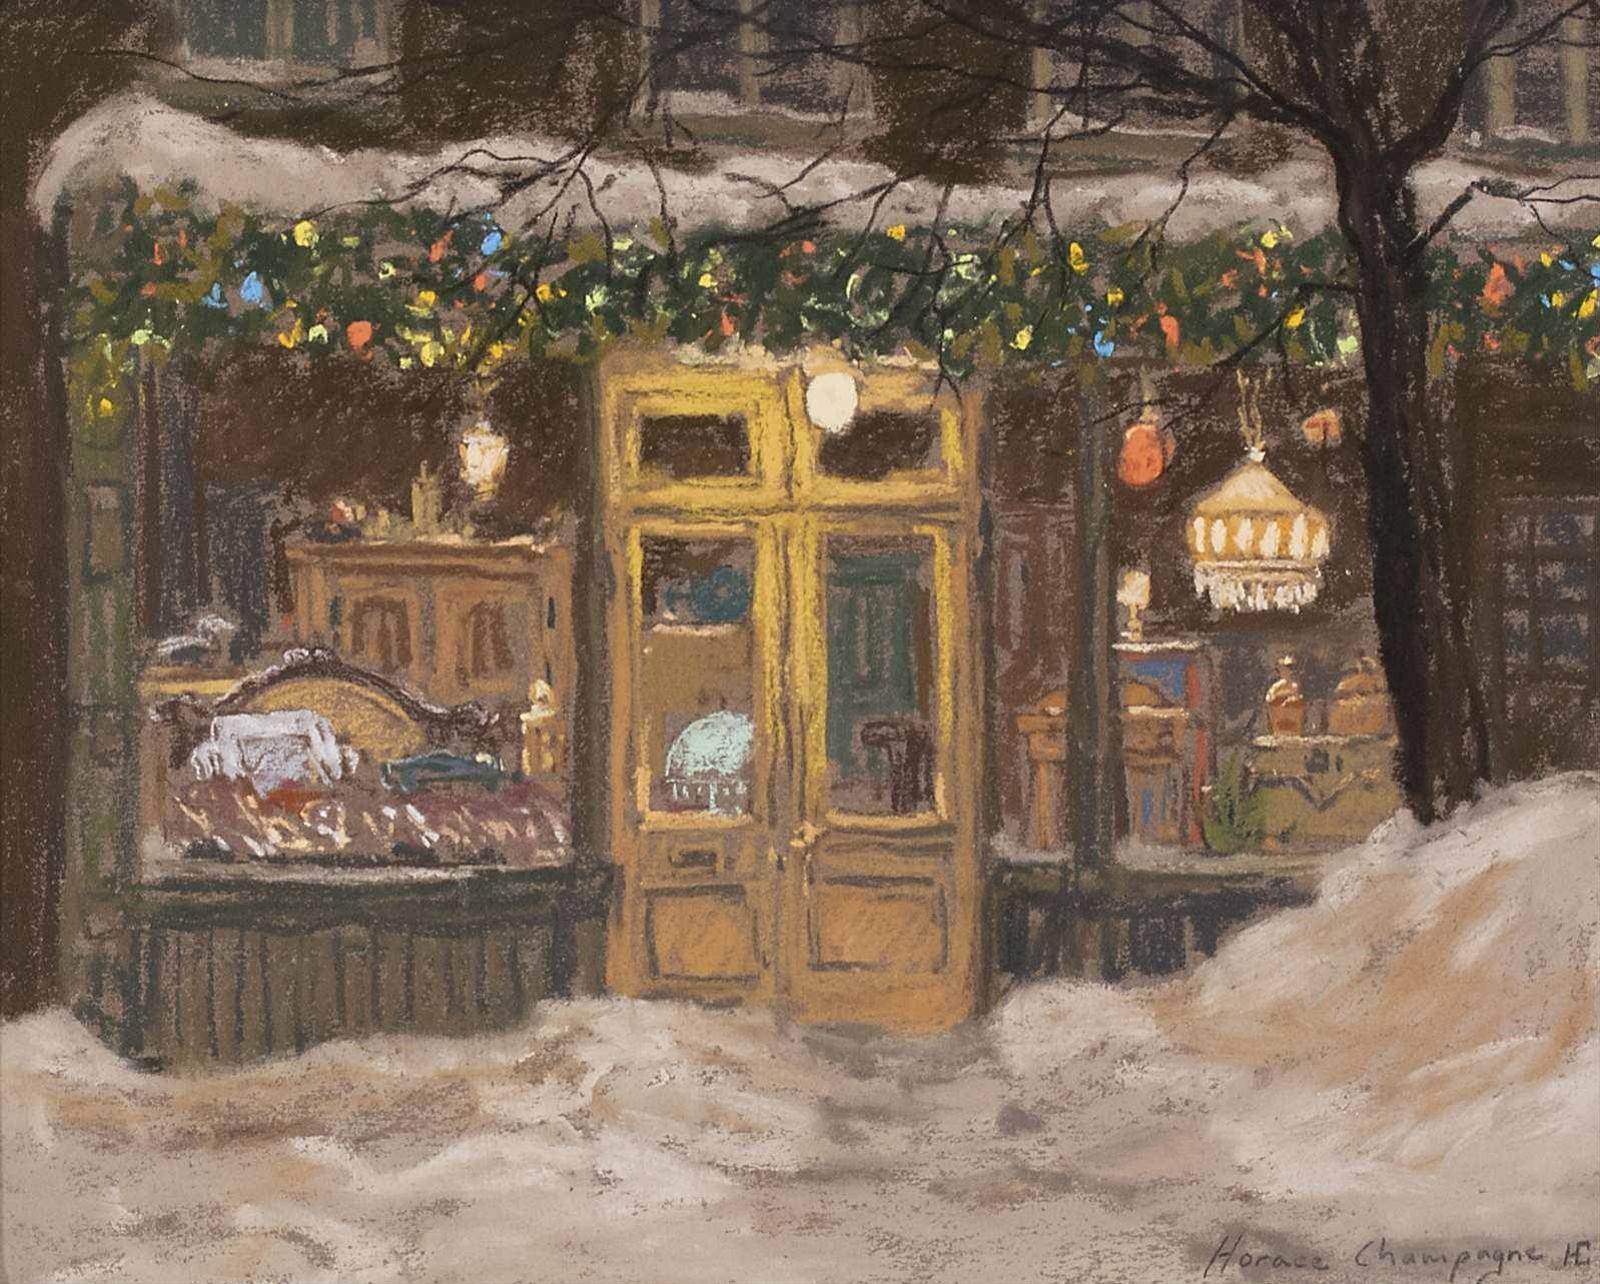 Horace Champagne (1937) - Christmas Temptations (Rue St-Paul, Quebec City); 1998